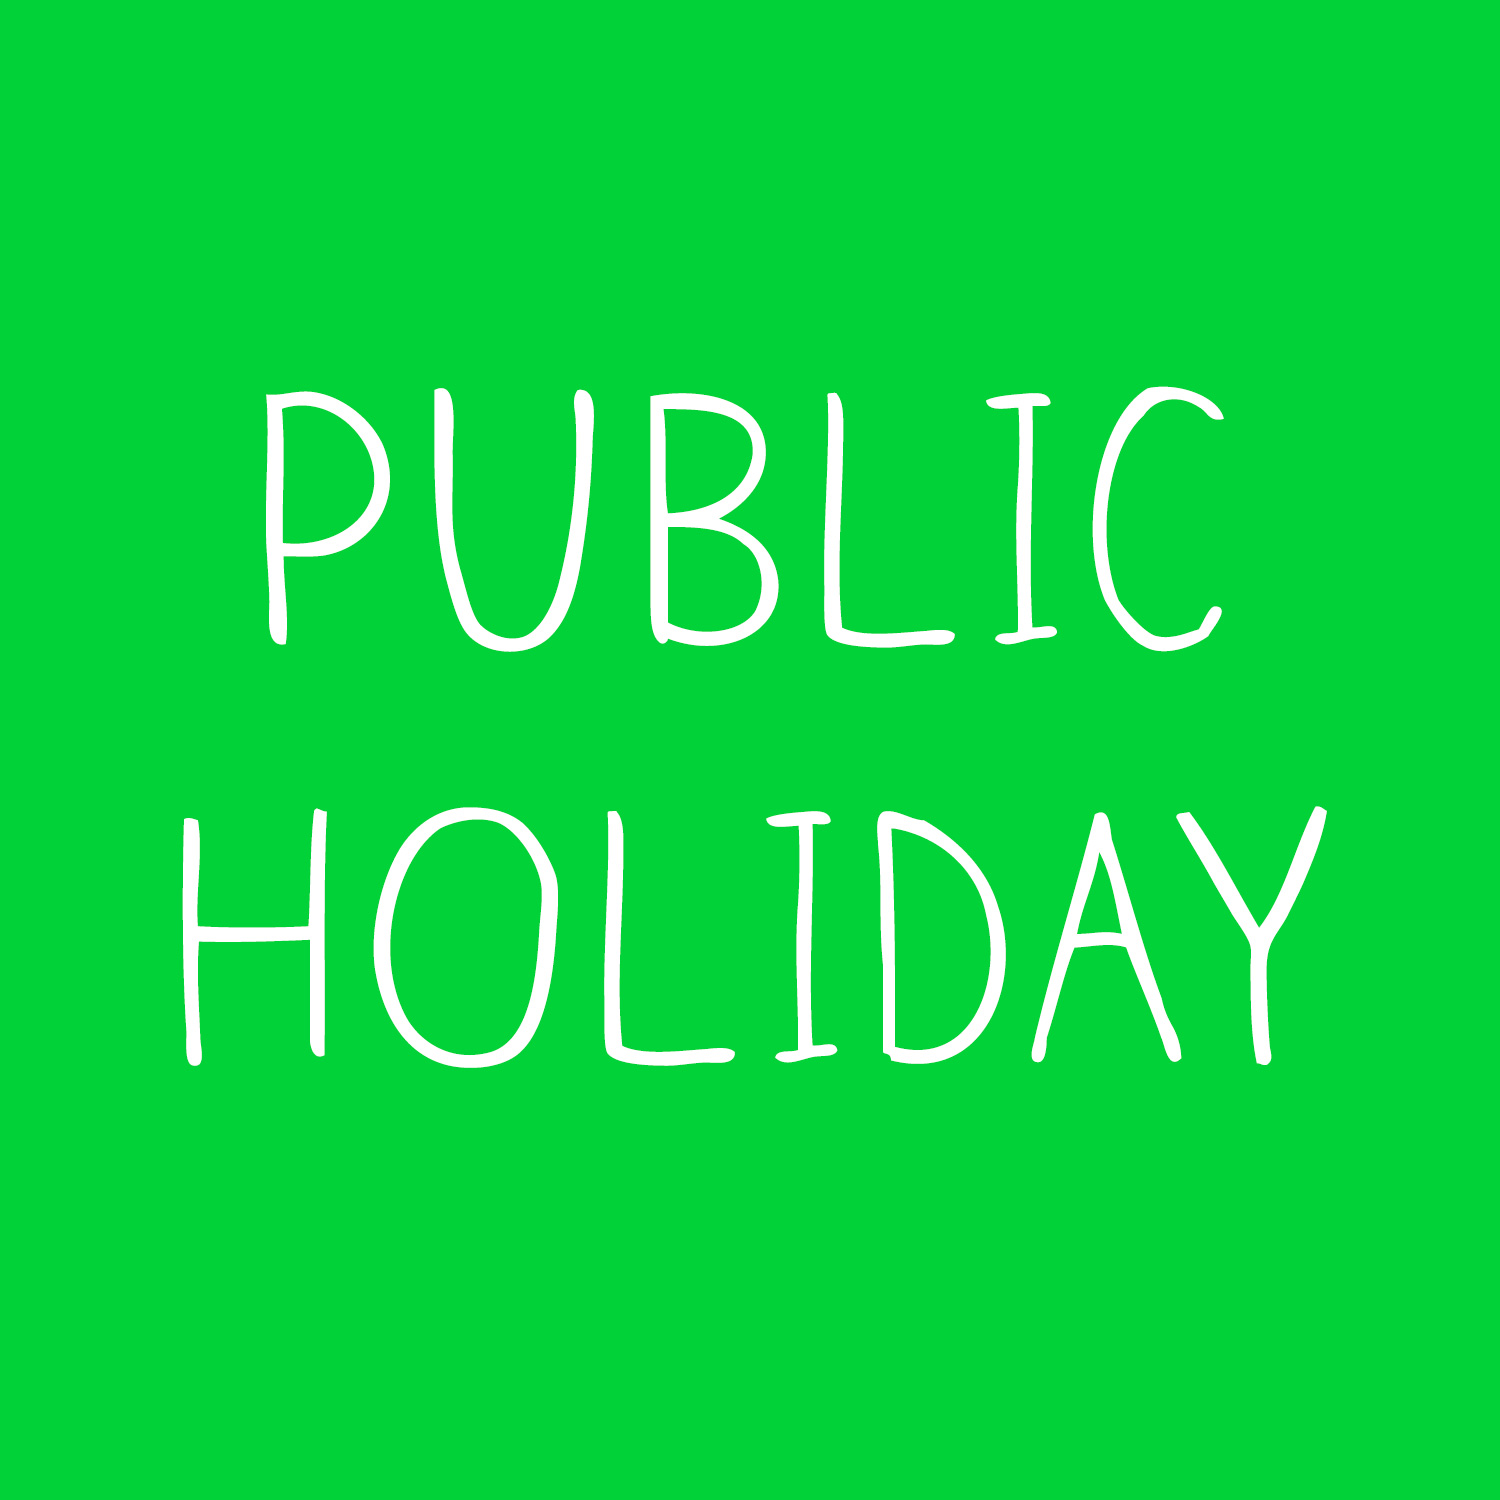 January 2022 public holidays